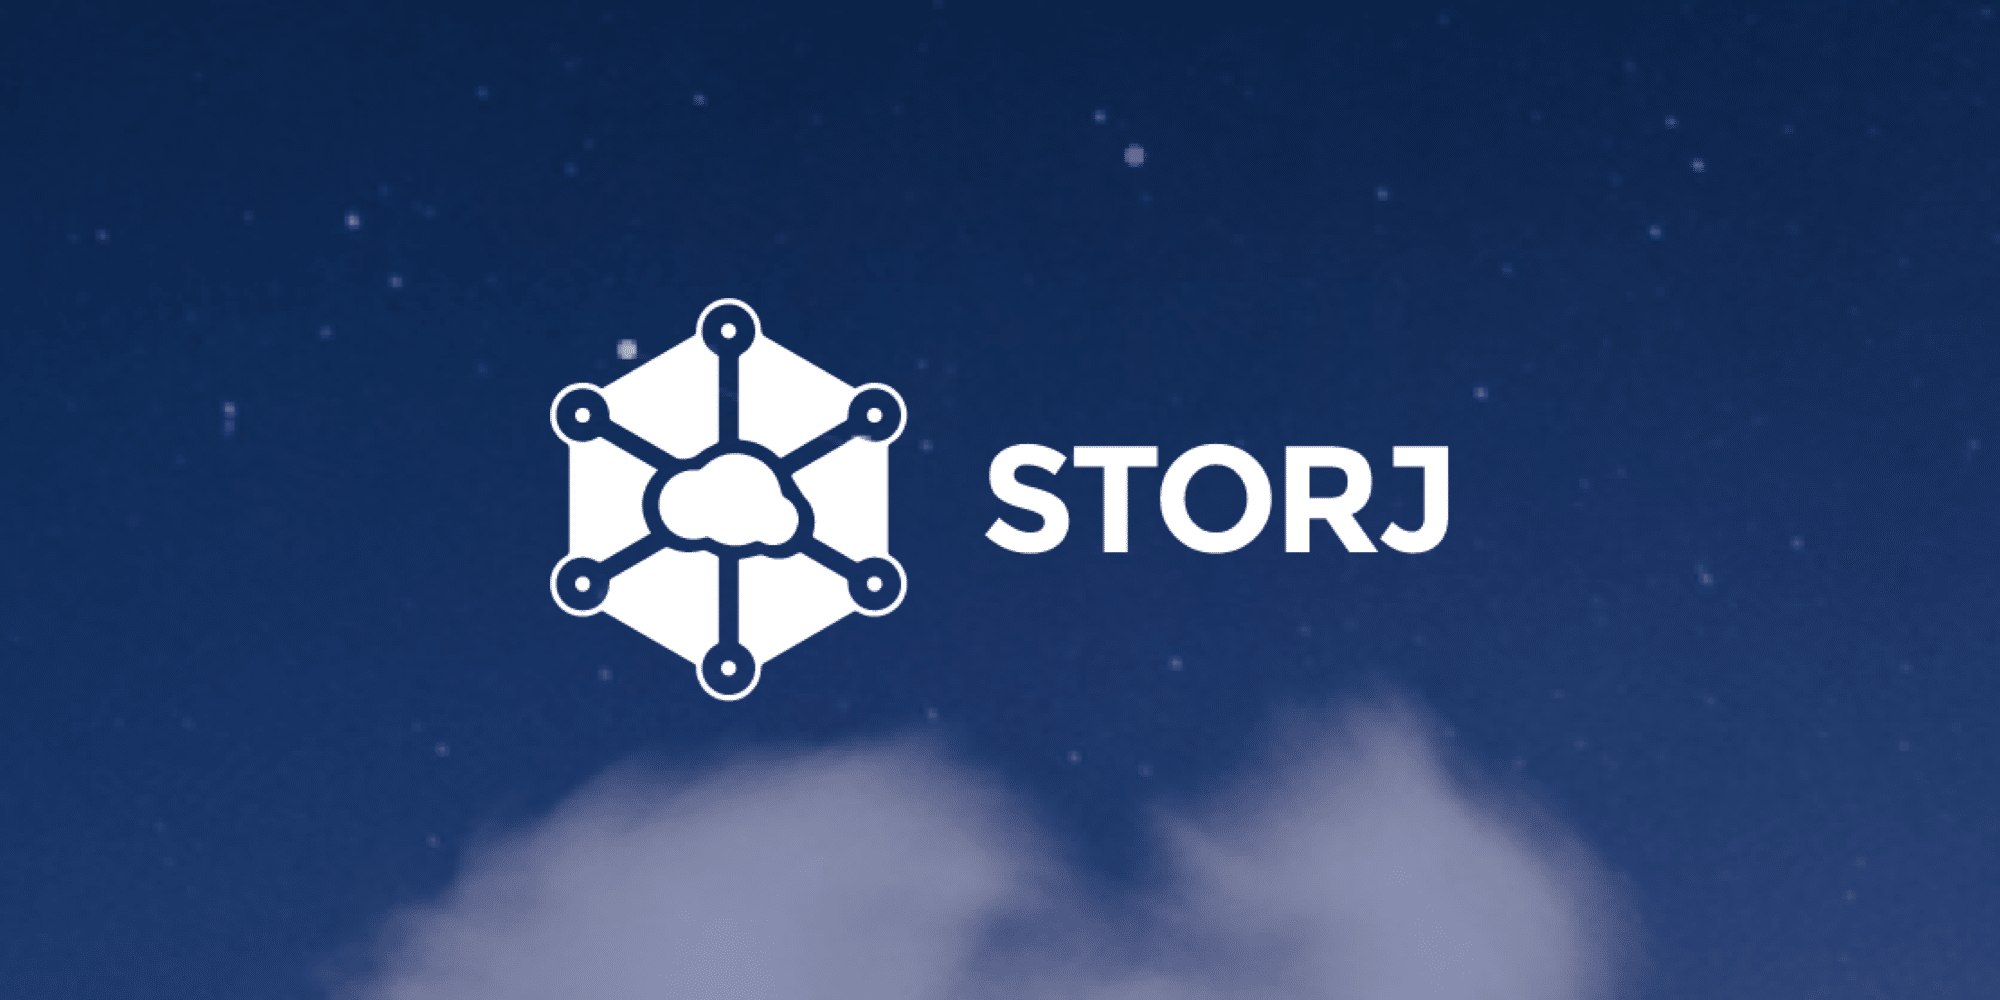 Storj project logo